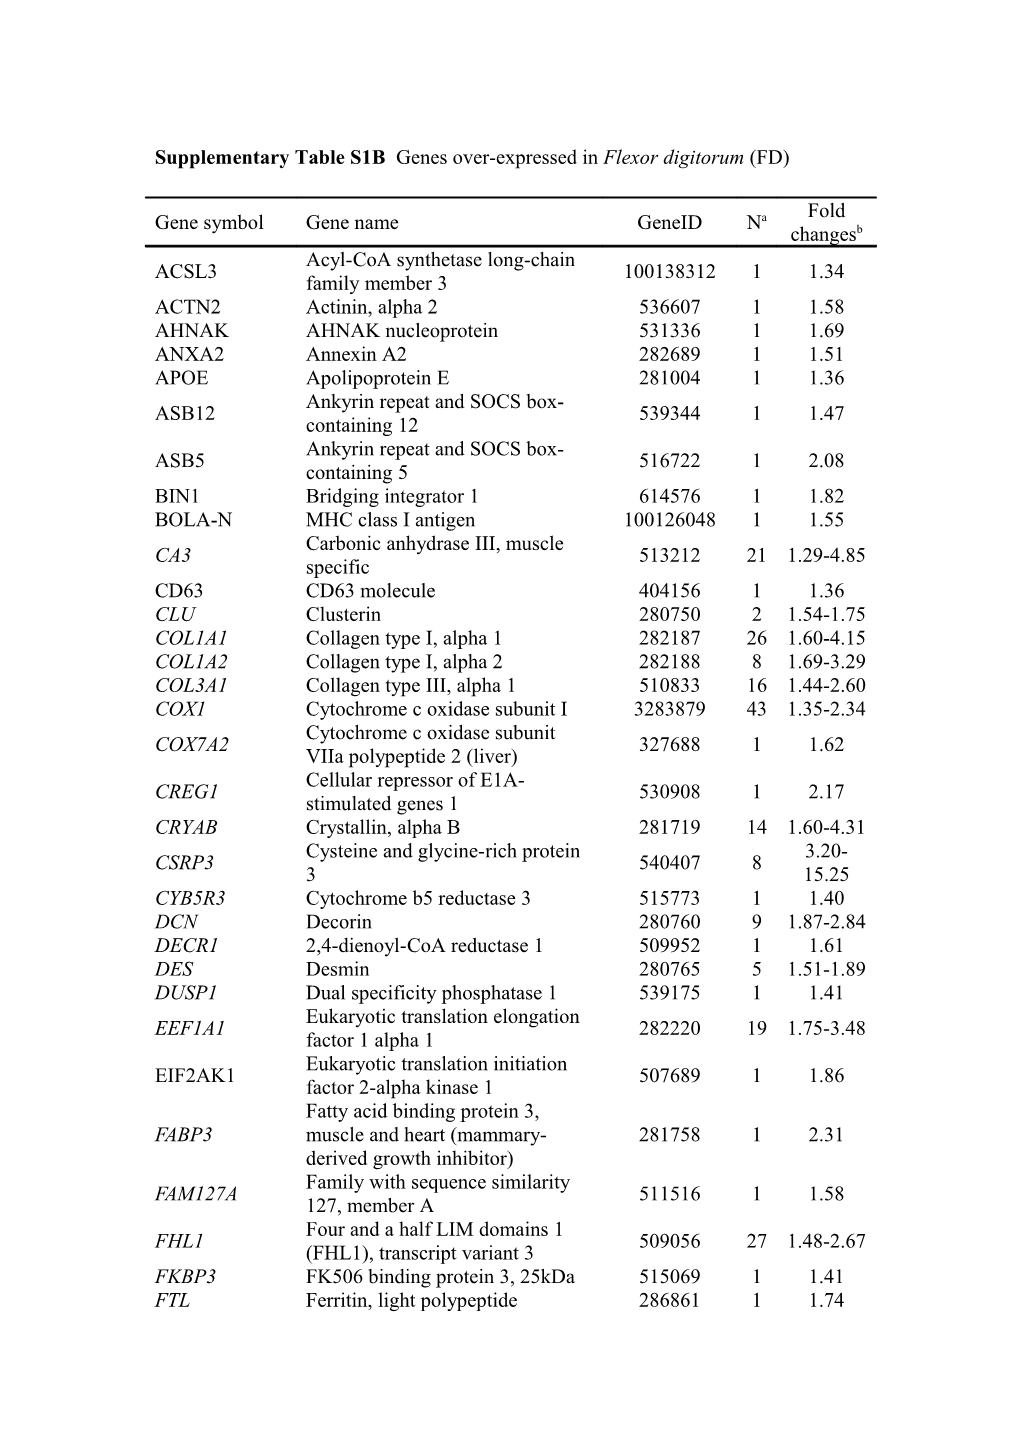 Supplementary Table S1B Genes Over-Expressed in Flexor Digitorum (FD)